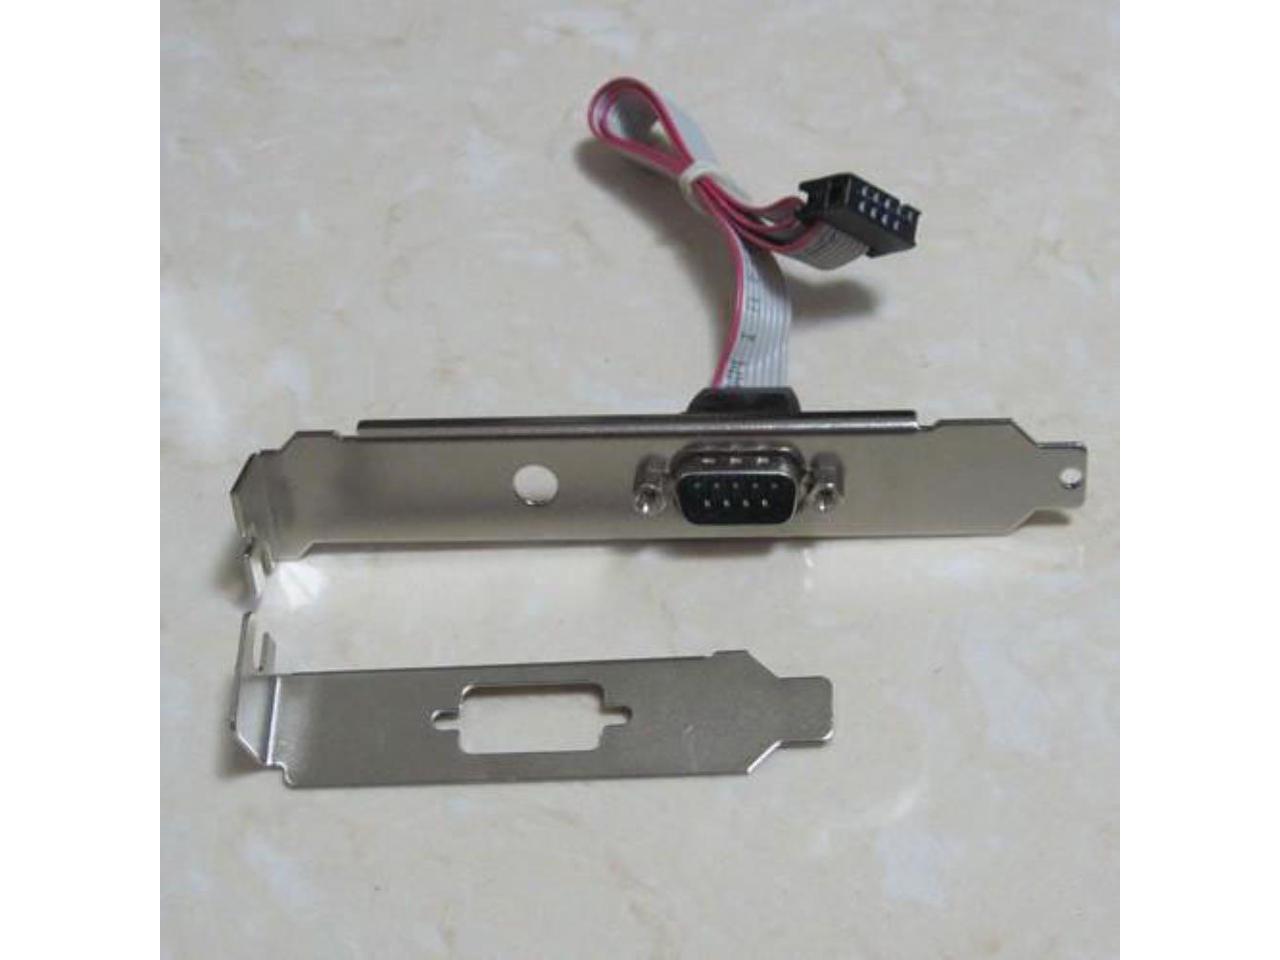 normal bracket serial DB9 RS232 9pin com port host case cableOJ 1x low profile 